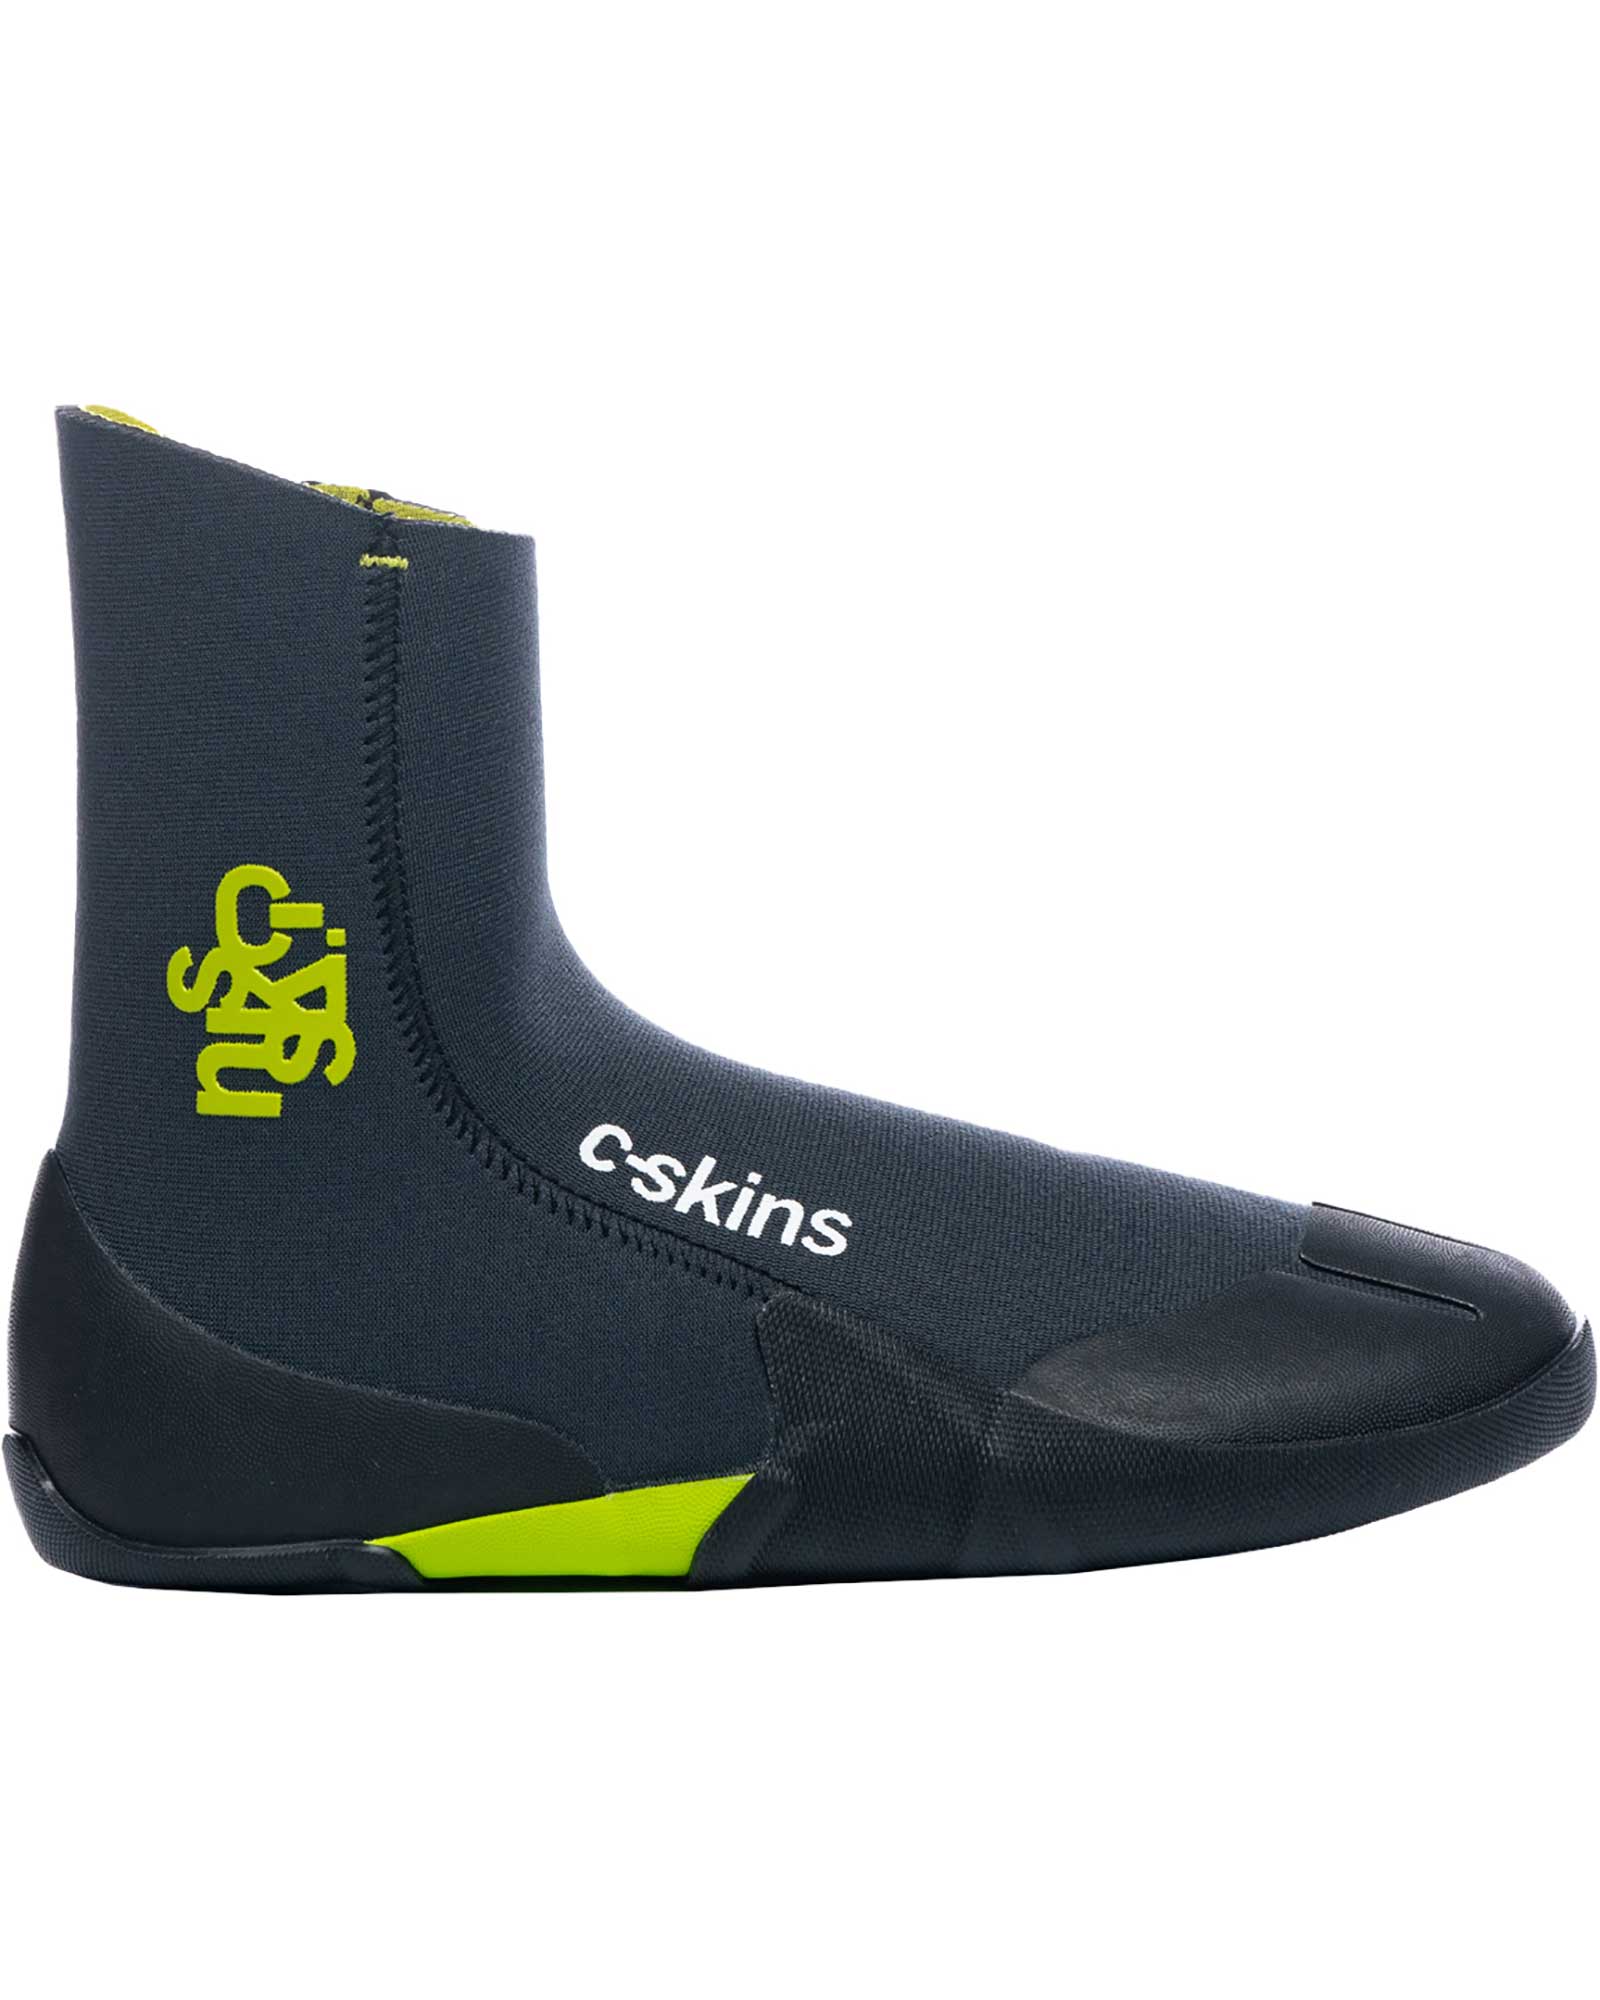 C Skins Legend 3.5mm Zipped Kids’ Boots - Graphite/Flash Green/Black XL